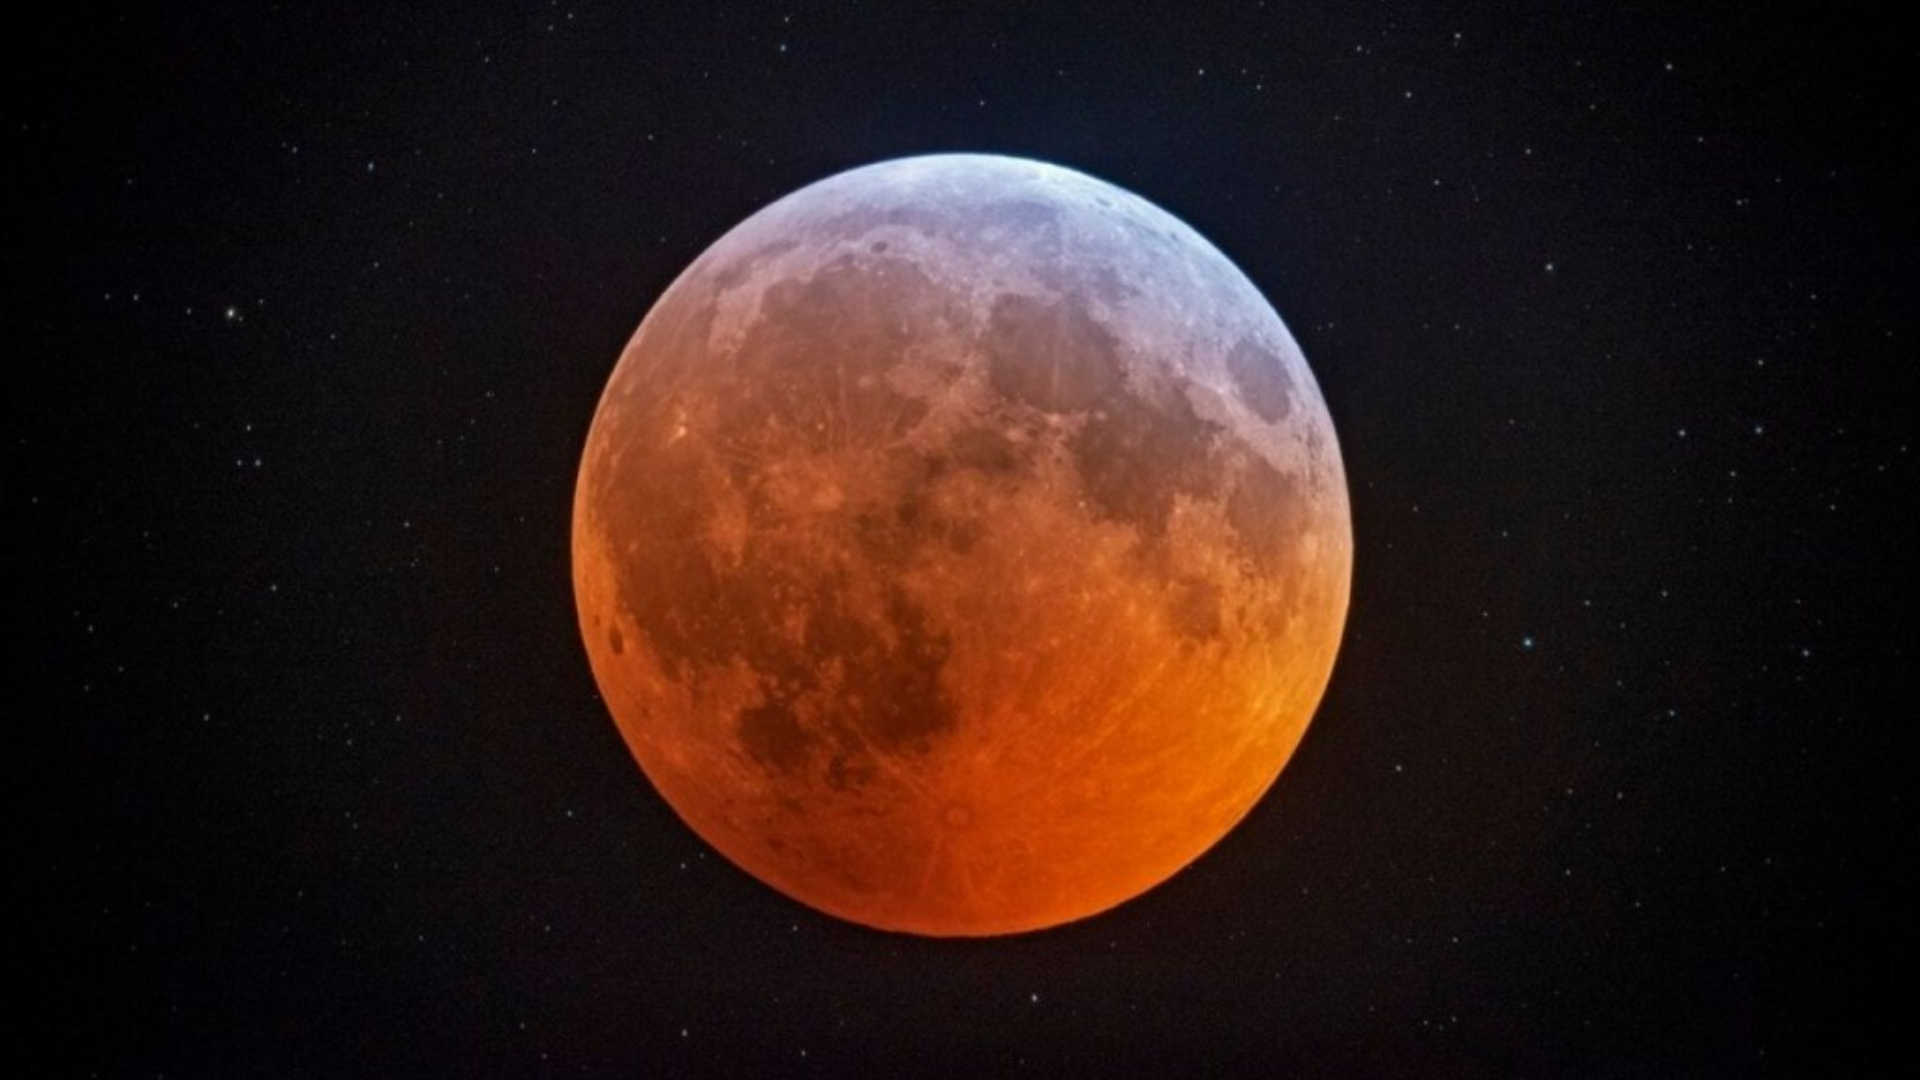 Penumbral Lunar Eclipse May 2024au Adey Robinia